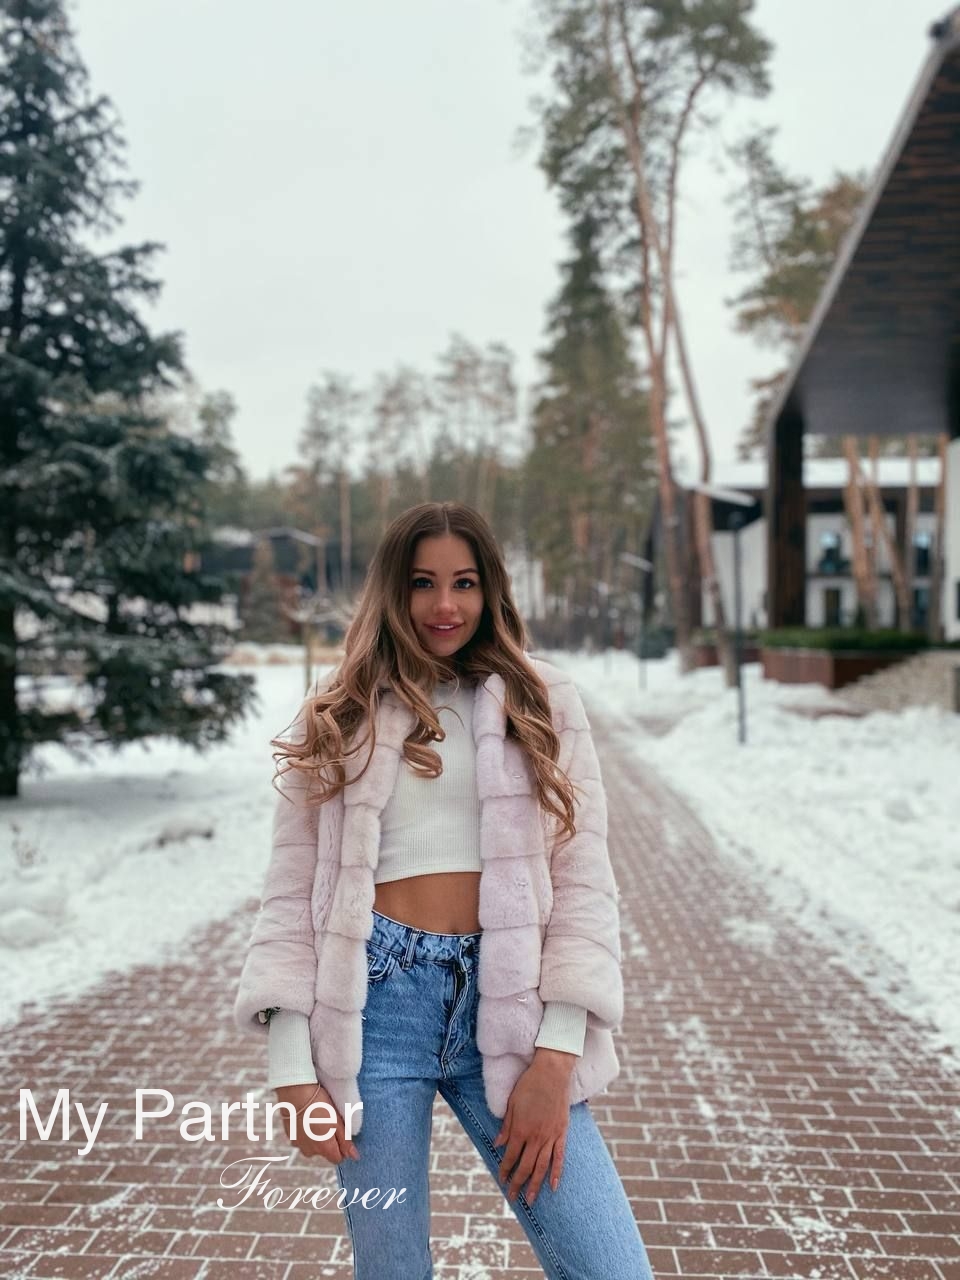 Single Girl from Ukraine - Yarina from Kiev, Ukraine